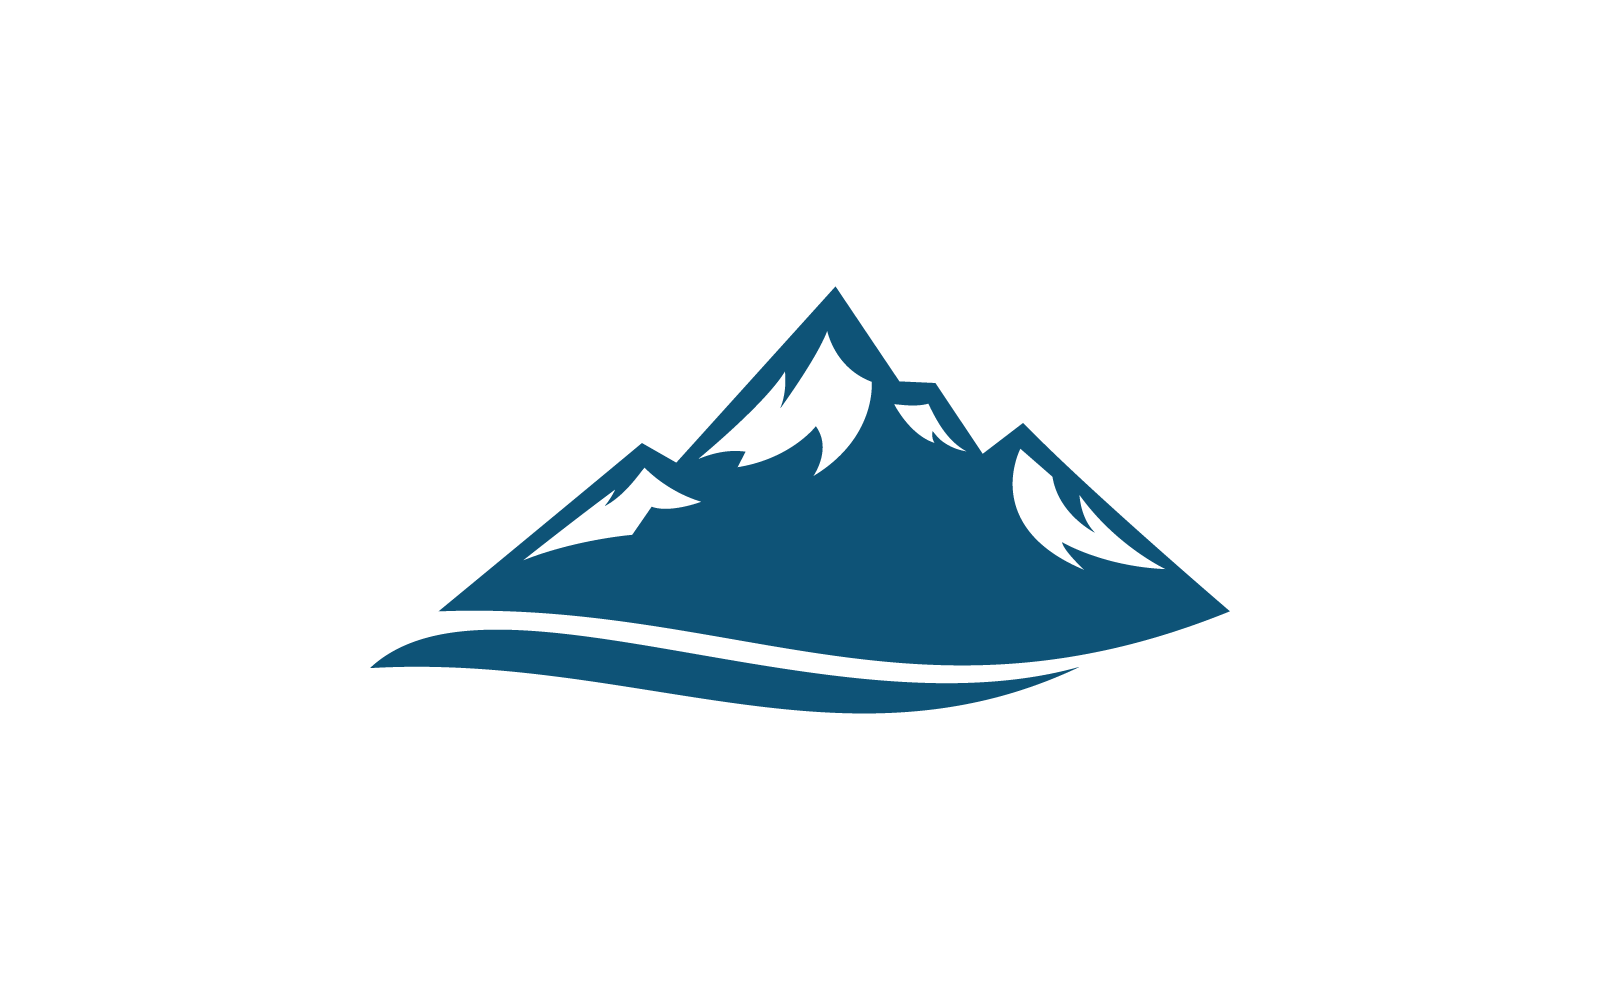 Mountain illustration logo template design